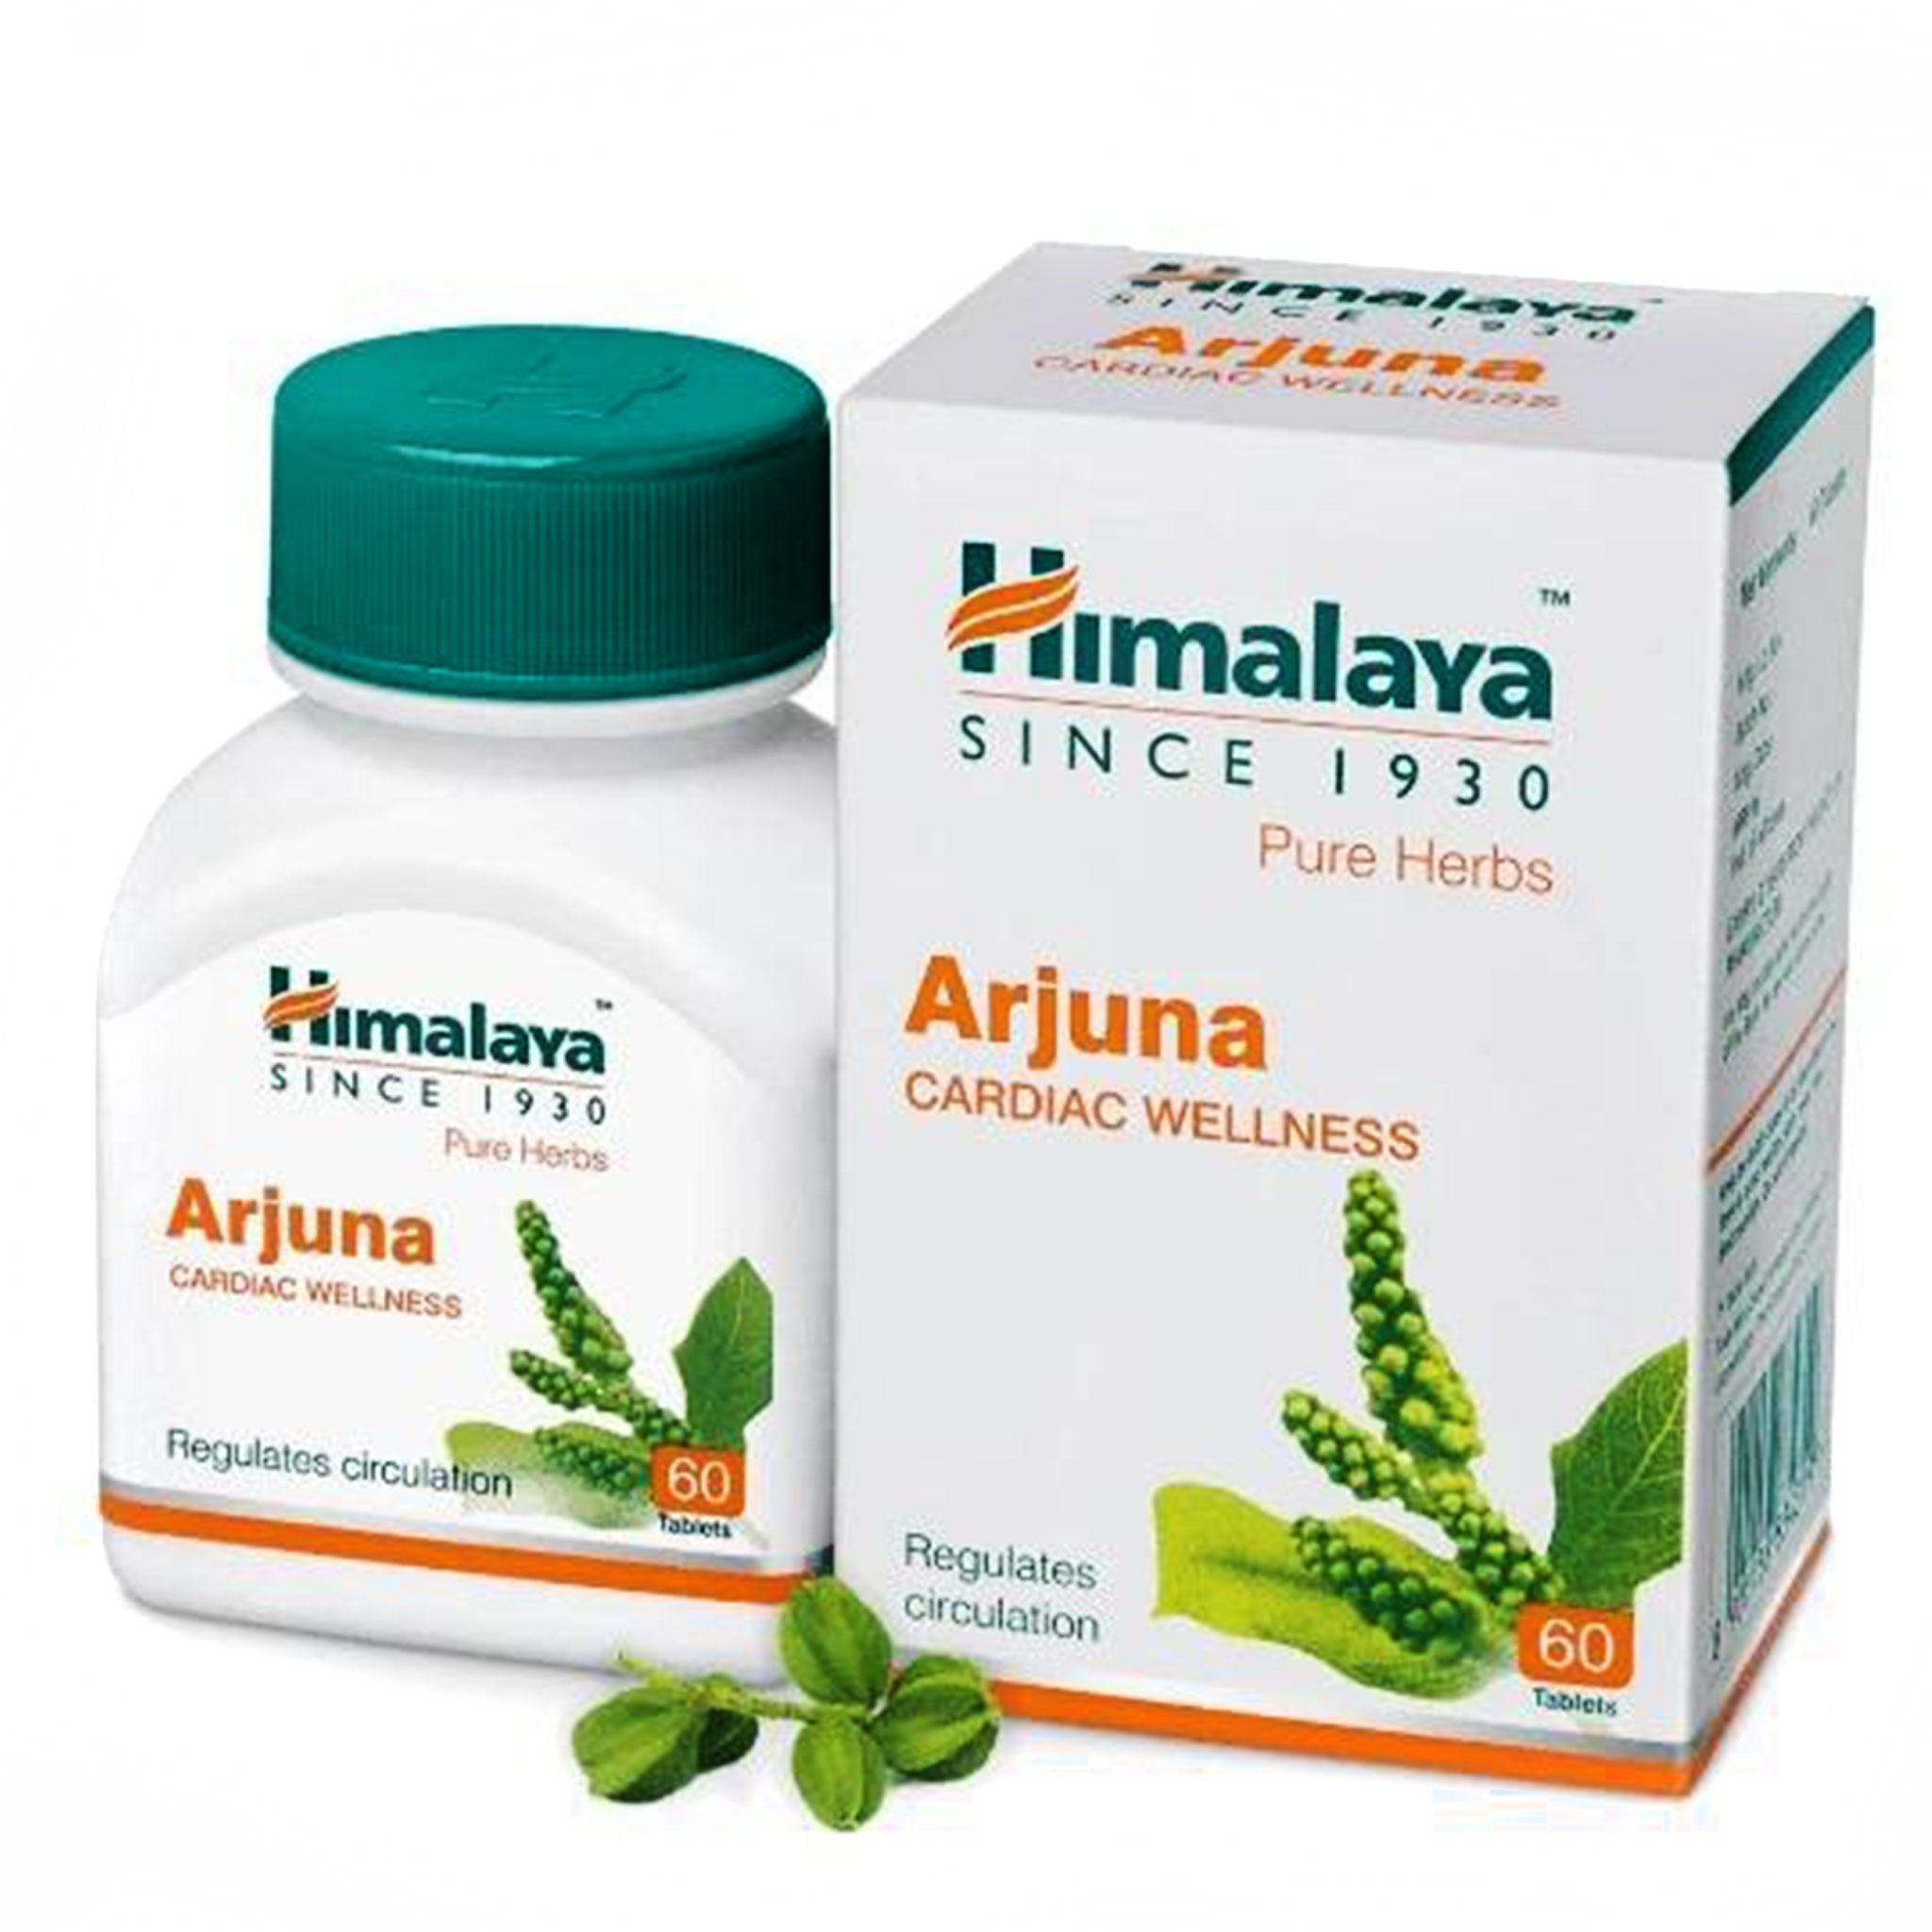 Himalaya Arjuna Pure Herbs 60 Tab  Cardiac Wellness Value Pack of 12 